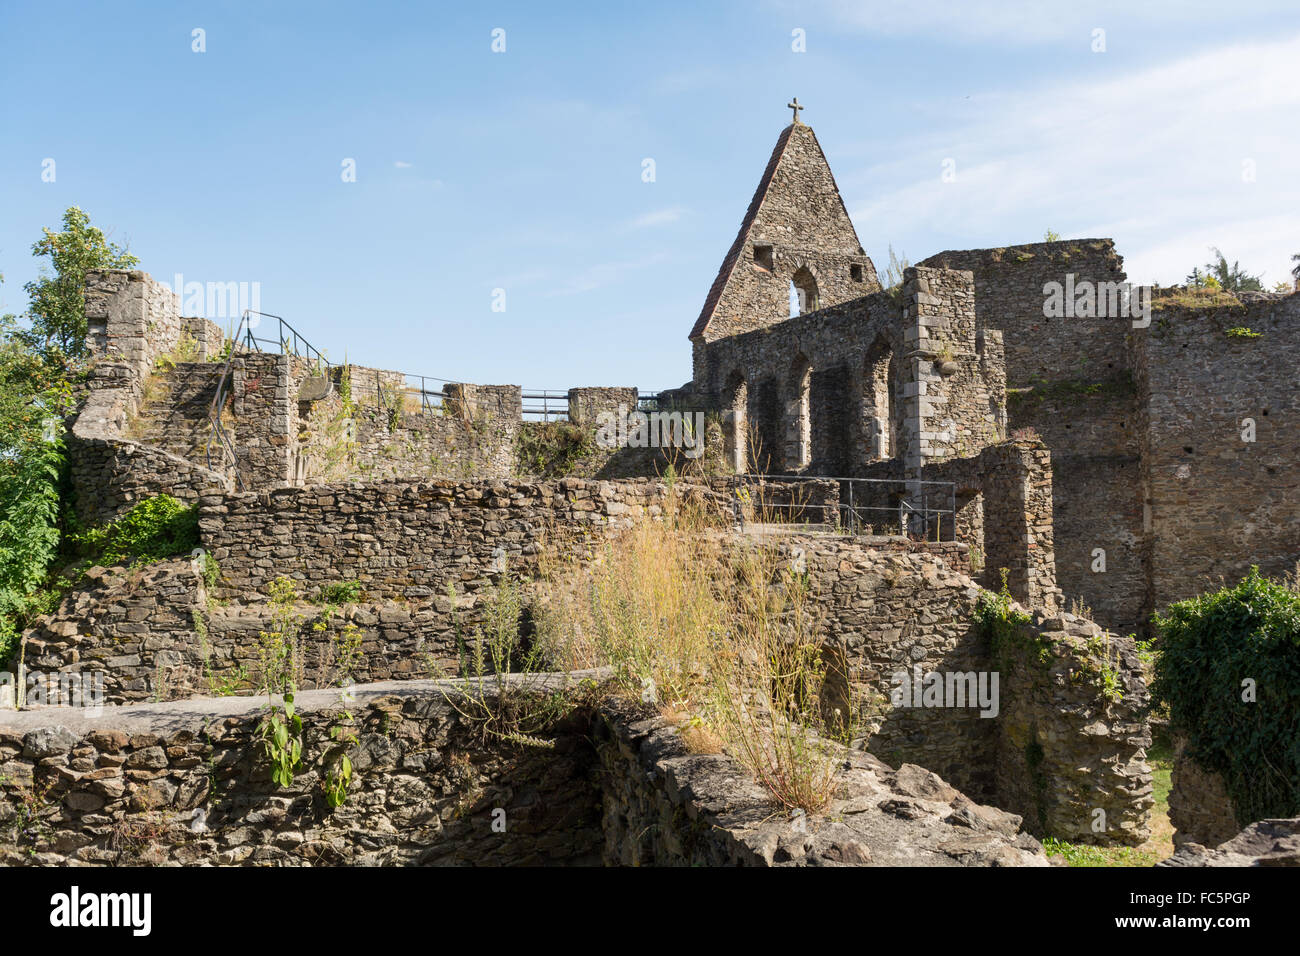 castle ruin schaunburg - austria Stock Photo